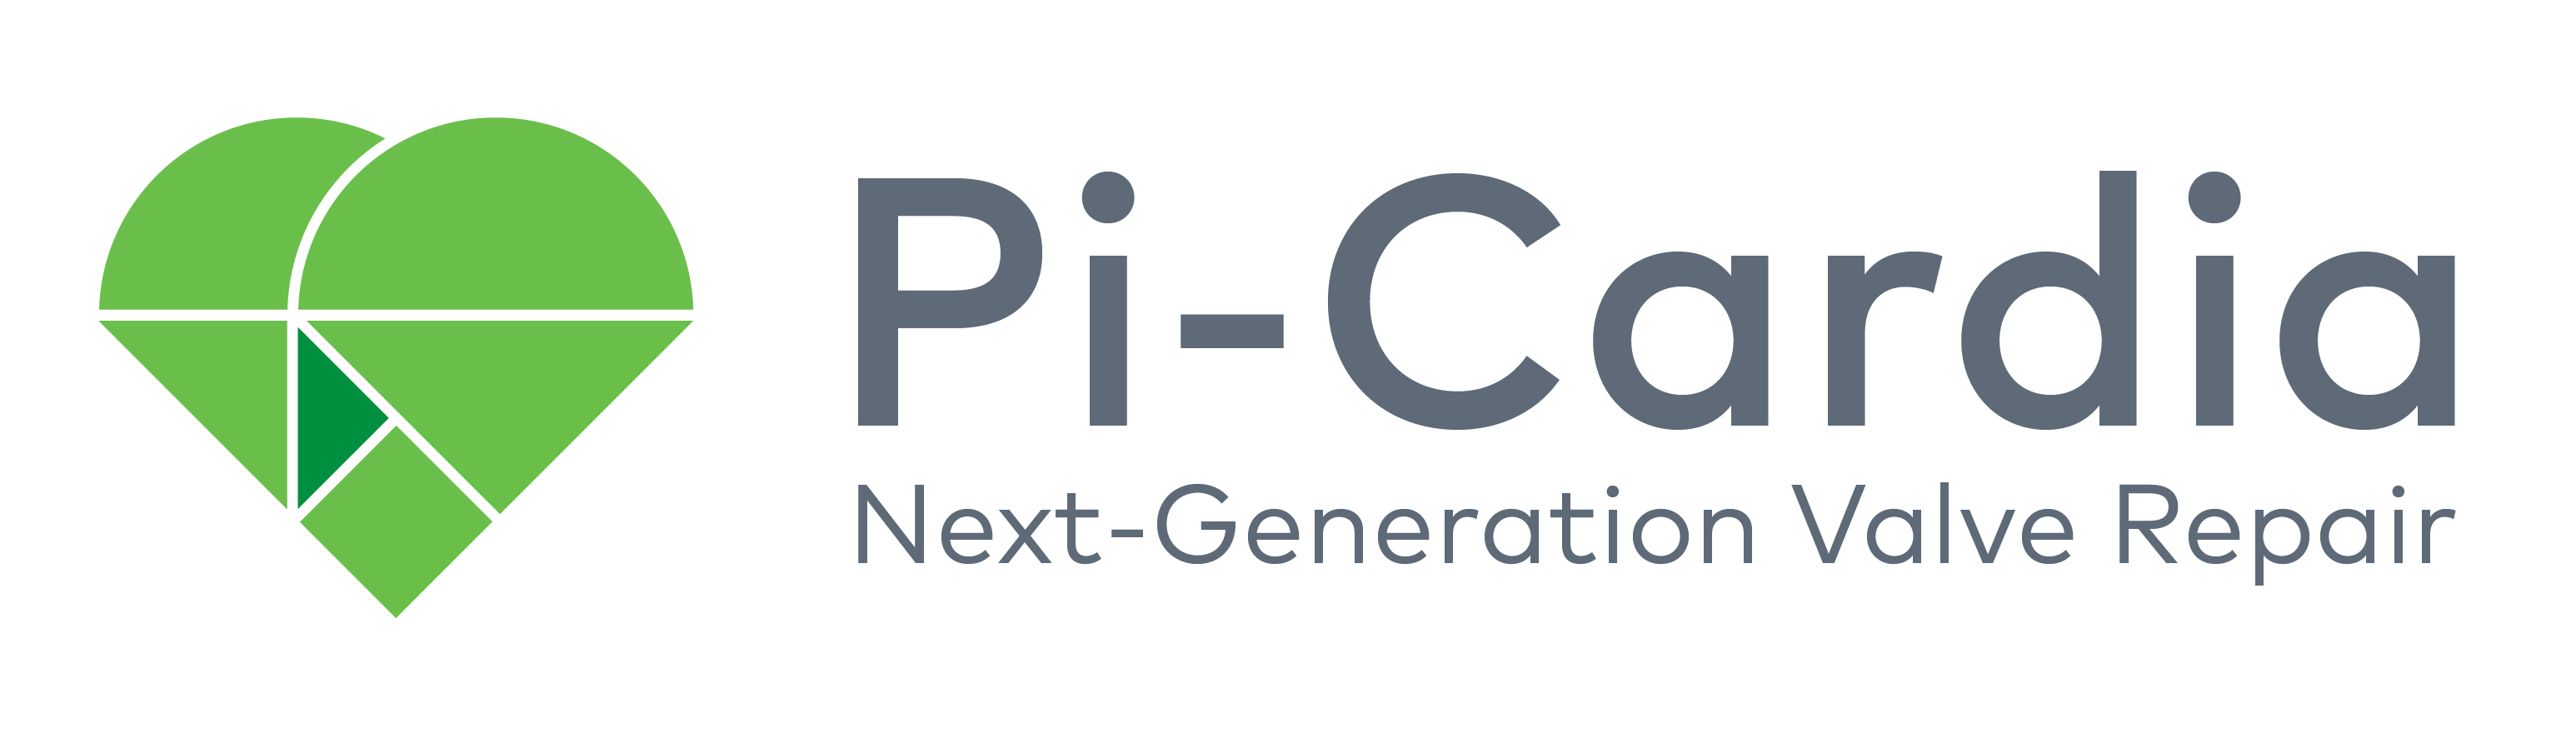 Pi-Cardia Ltd., Monday, December 19, 2022, Press release picture